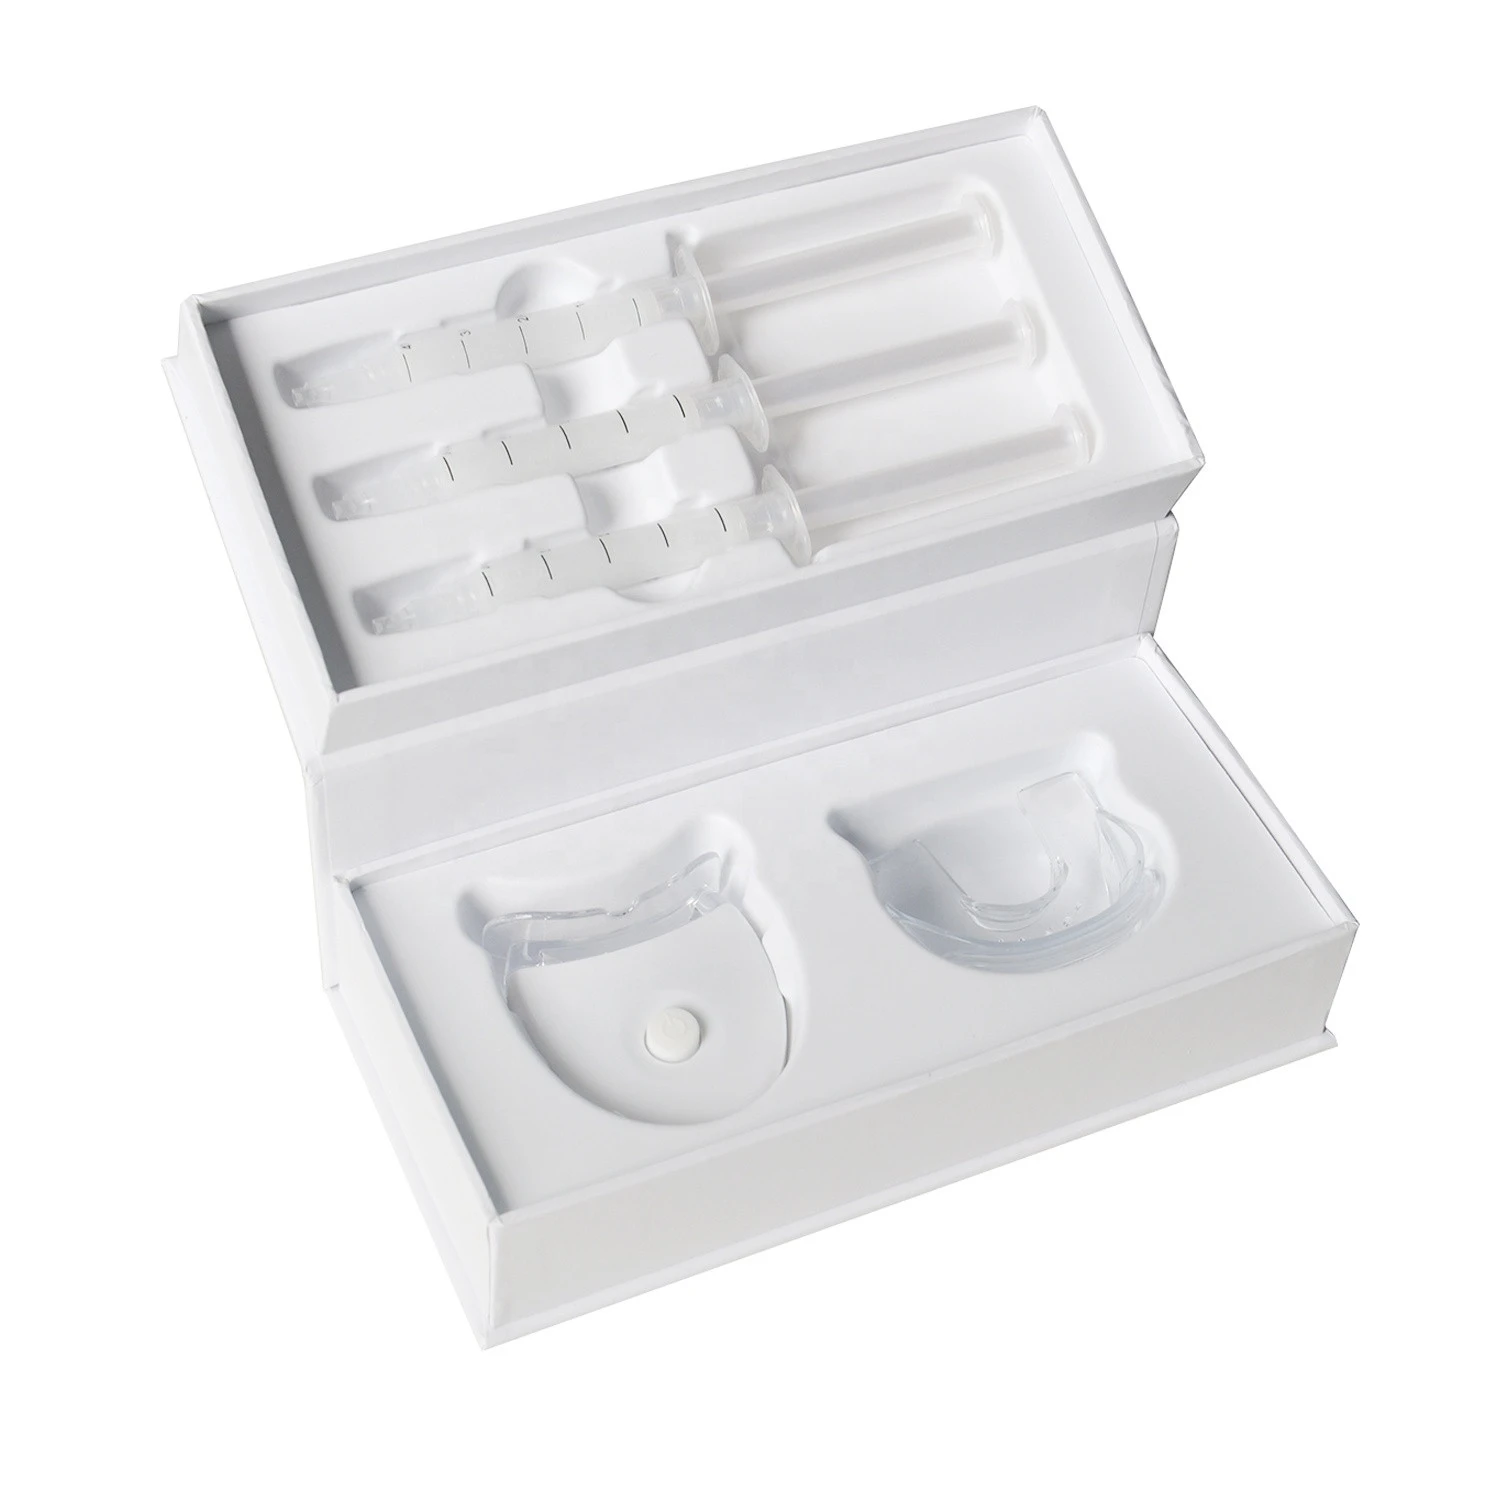 OEM ODM Office Gift Home Use Led Light and Gel Syringe Teeth Whitening Kit Teeth Bleaching Device